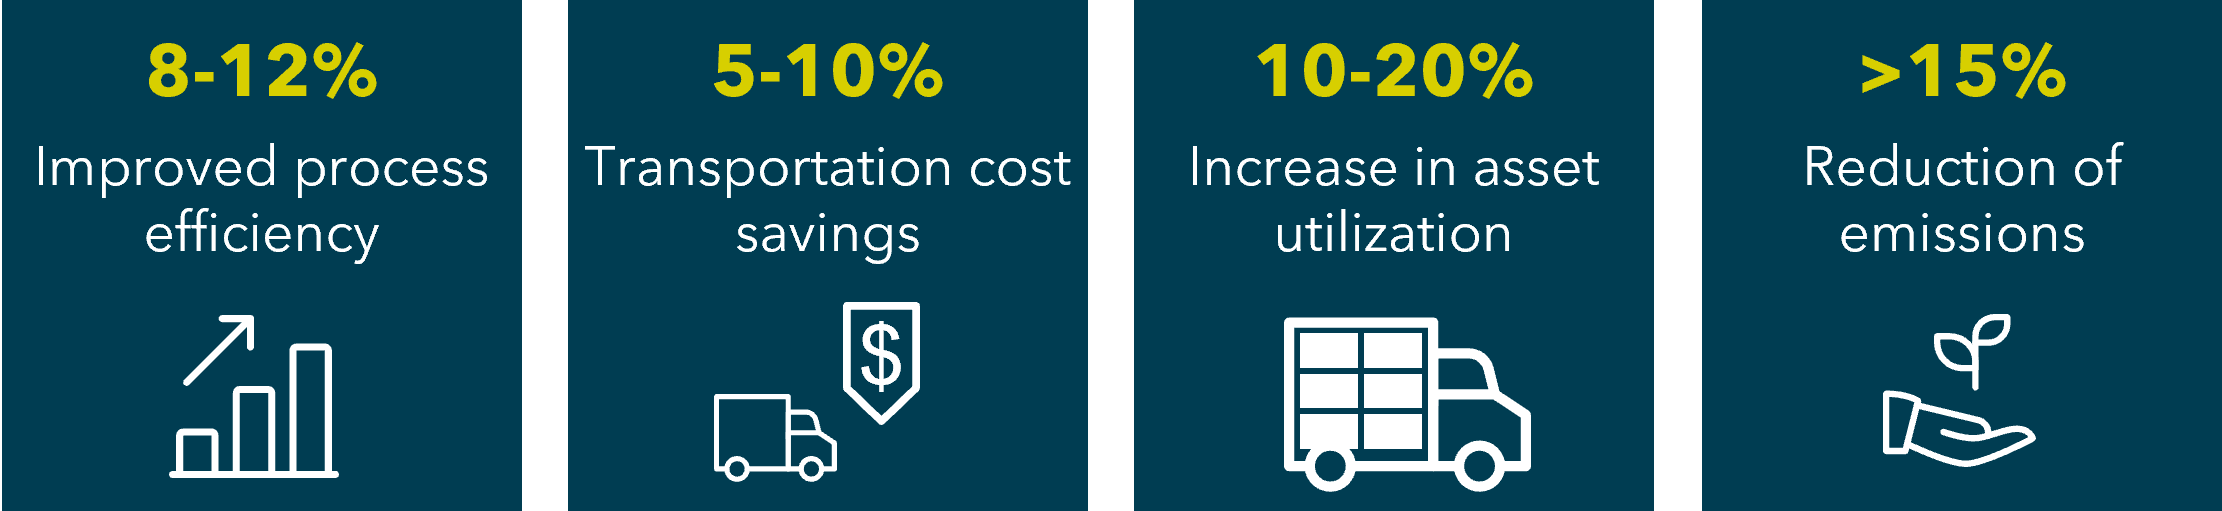 Benefits of Kinaxis Transportation Load Optimizer by 4flow: Improved efficiency, lower transportation spend, better asset utilization, lower emissions.